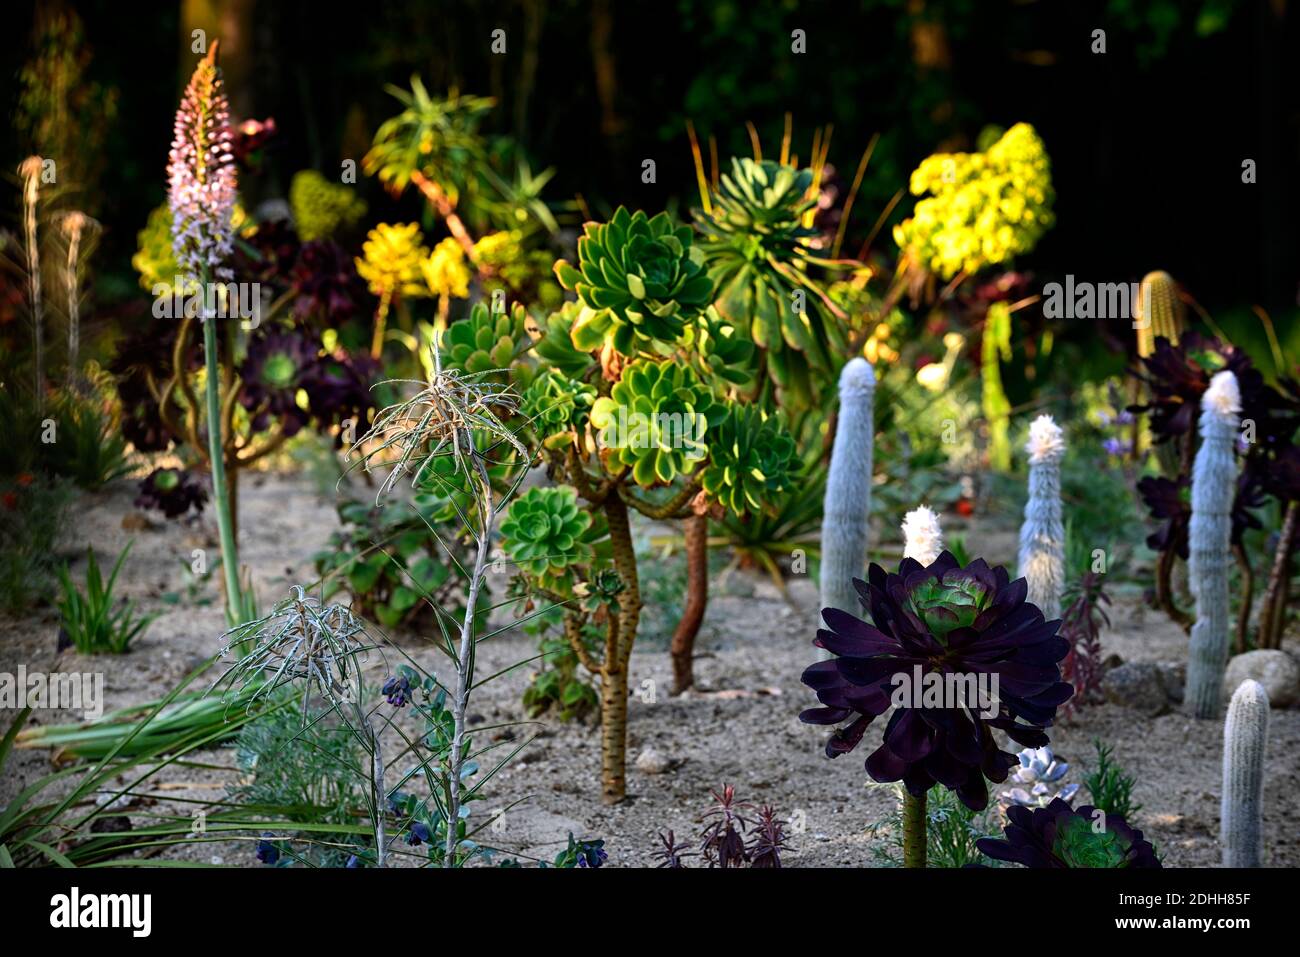 sand bed,aeonium,xeriscaping,xeriscape,Olearia lacunosa,aeonium,cleistocactus strausii,cactus,cacti,aloe,aloes,dry bed,dry garden,xeriscaping,mix,mixe Stock Photo